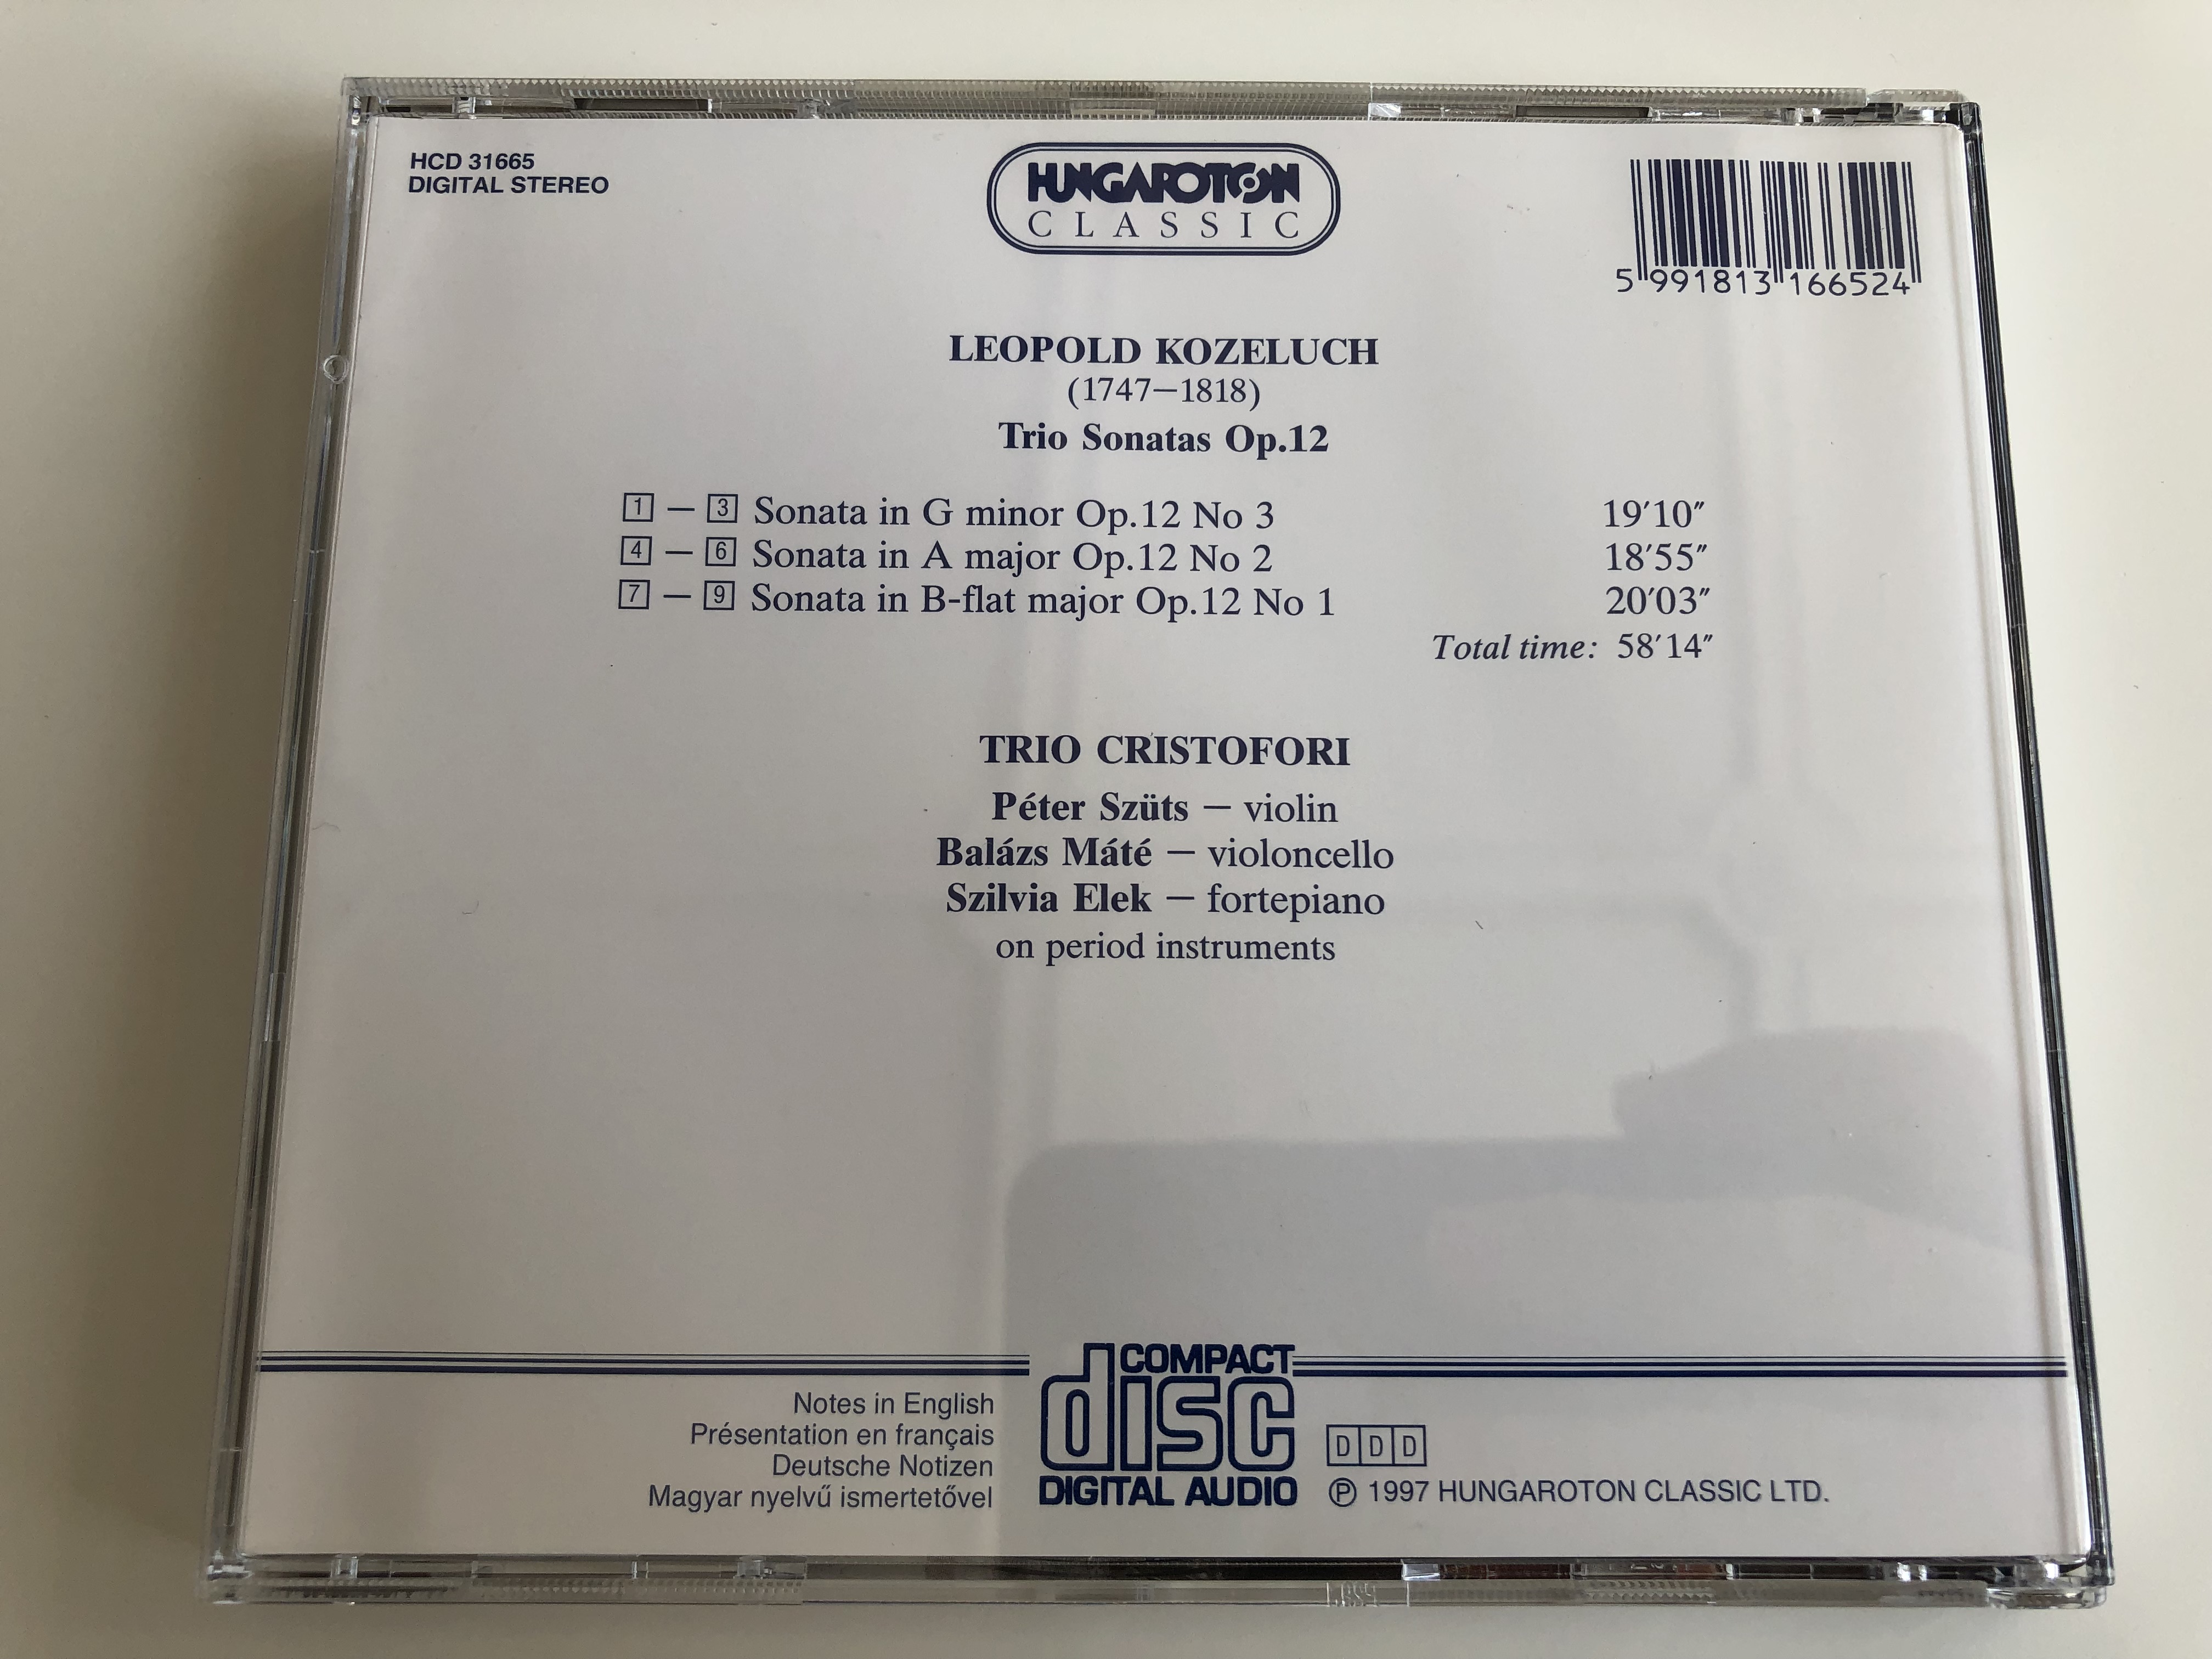 leopold-kozeluch-trio-sonatas-op.-12-trio-cristofori-on-period-instruments-hungaroton-classic-audio-cd-1997-stereo-hcd-31665-7-.jpg